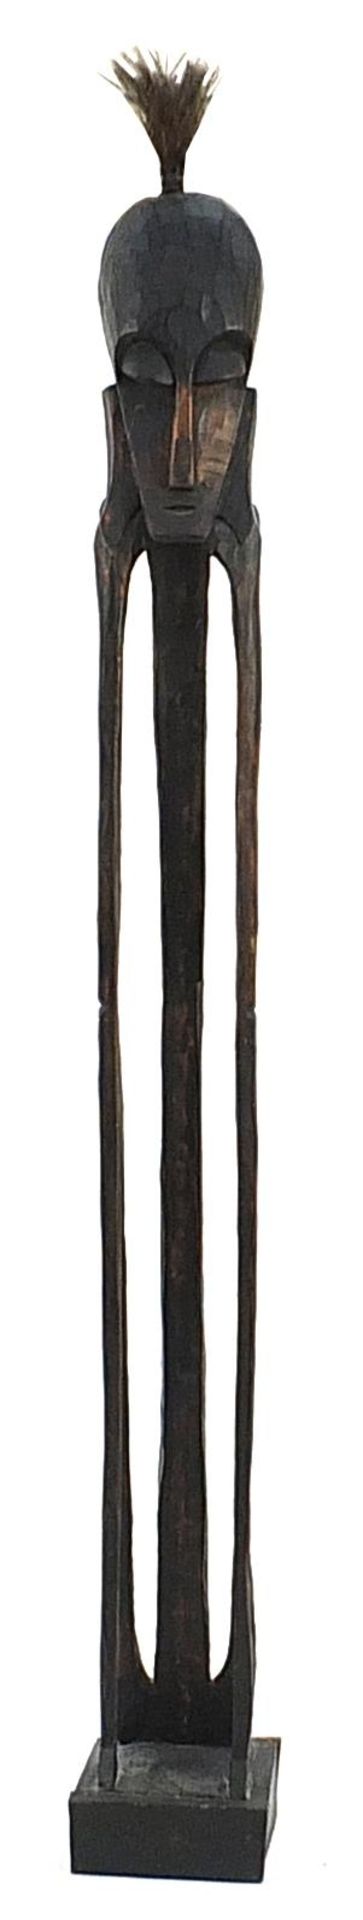 Large floor standing carved wood tribal figure, 215cm high